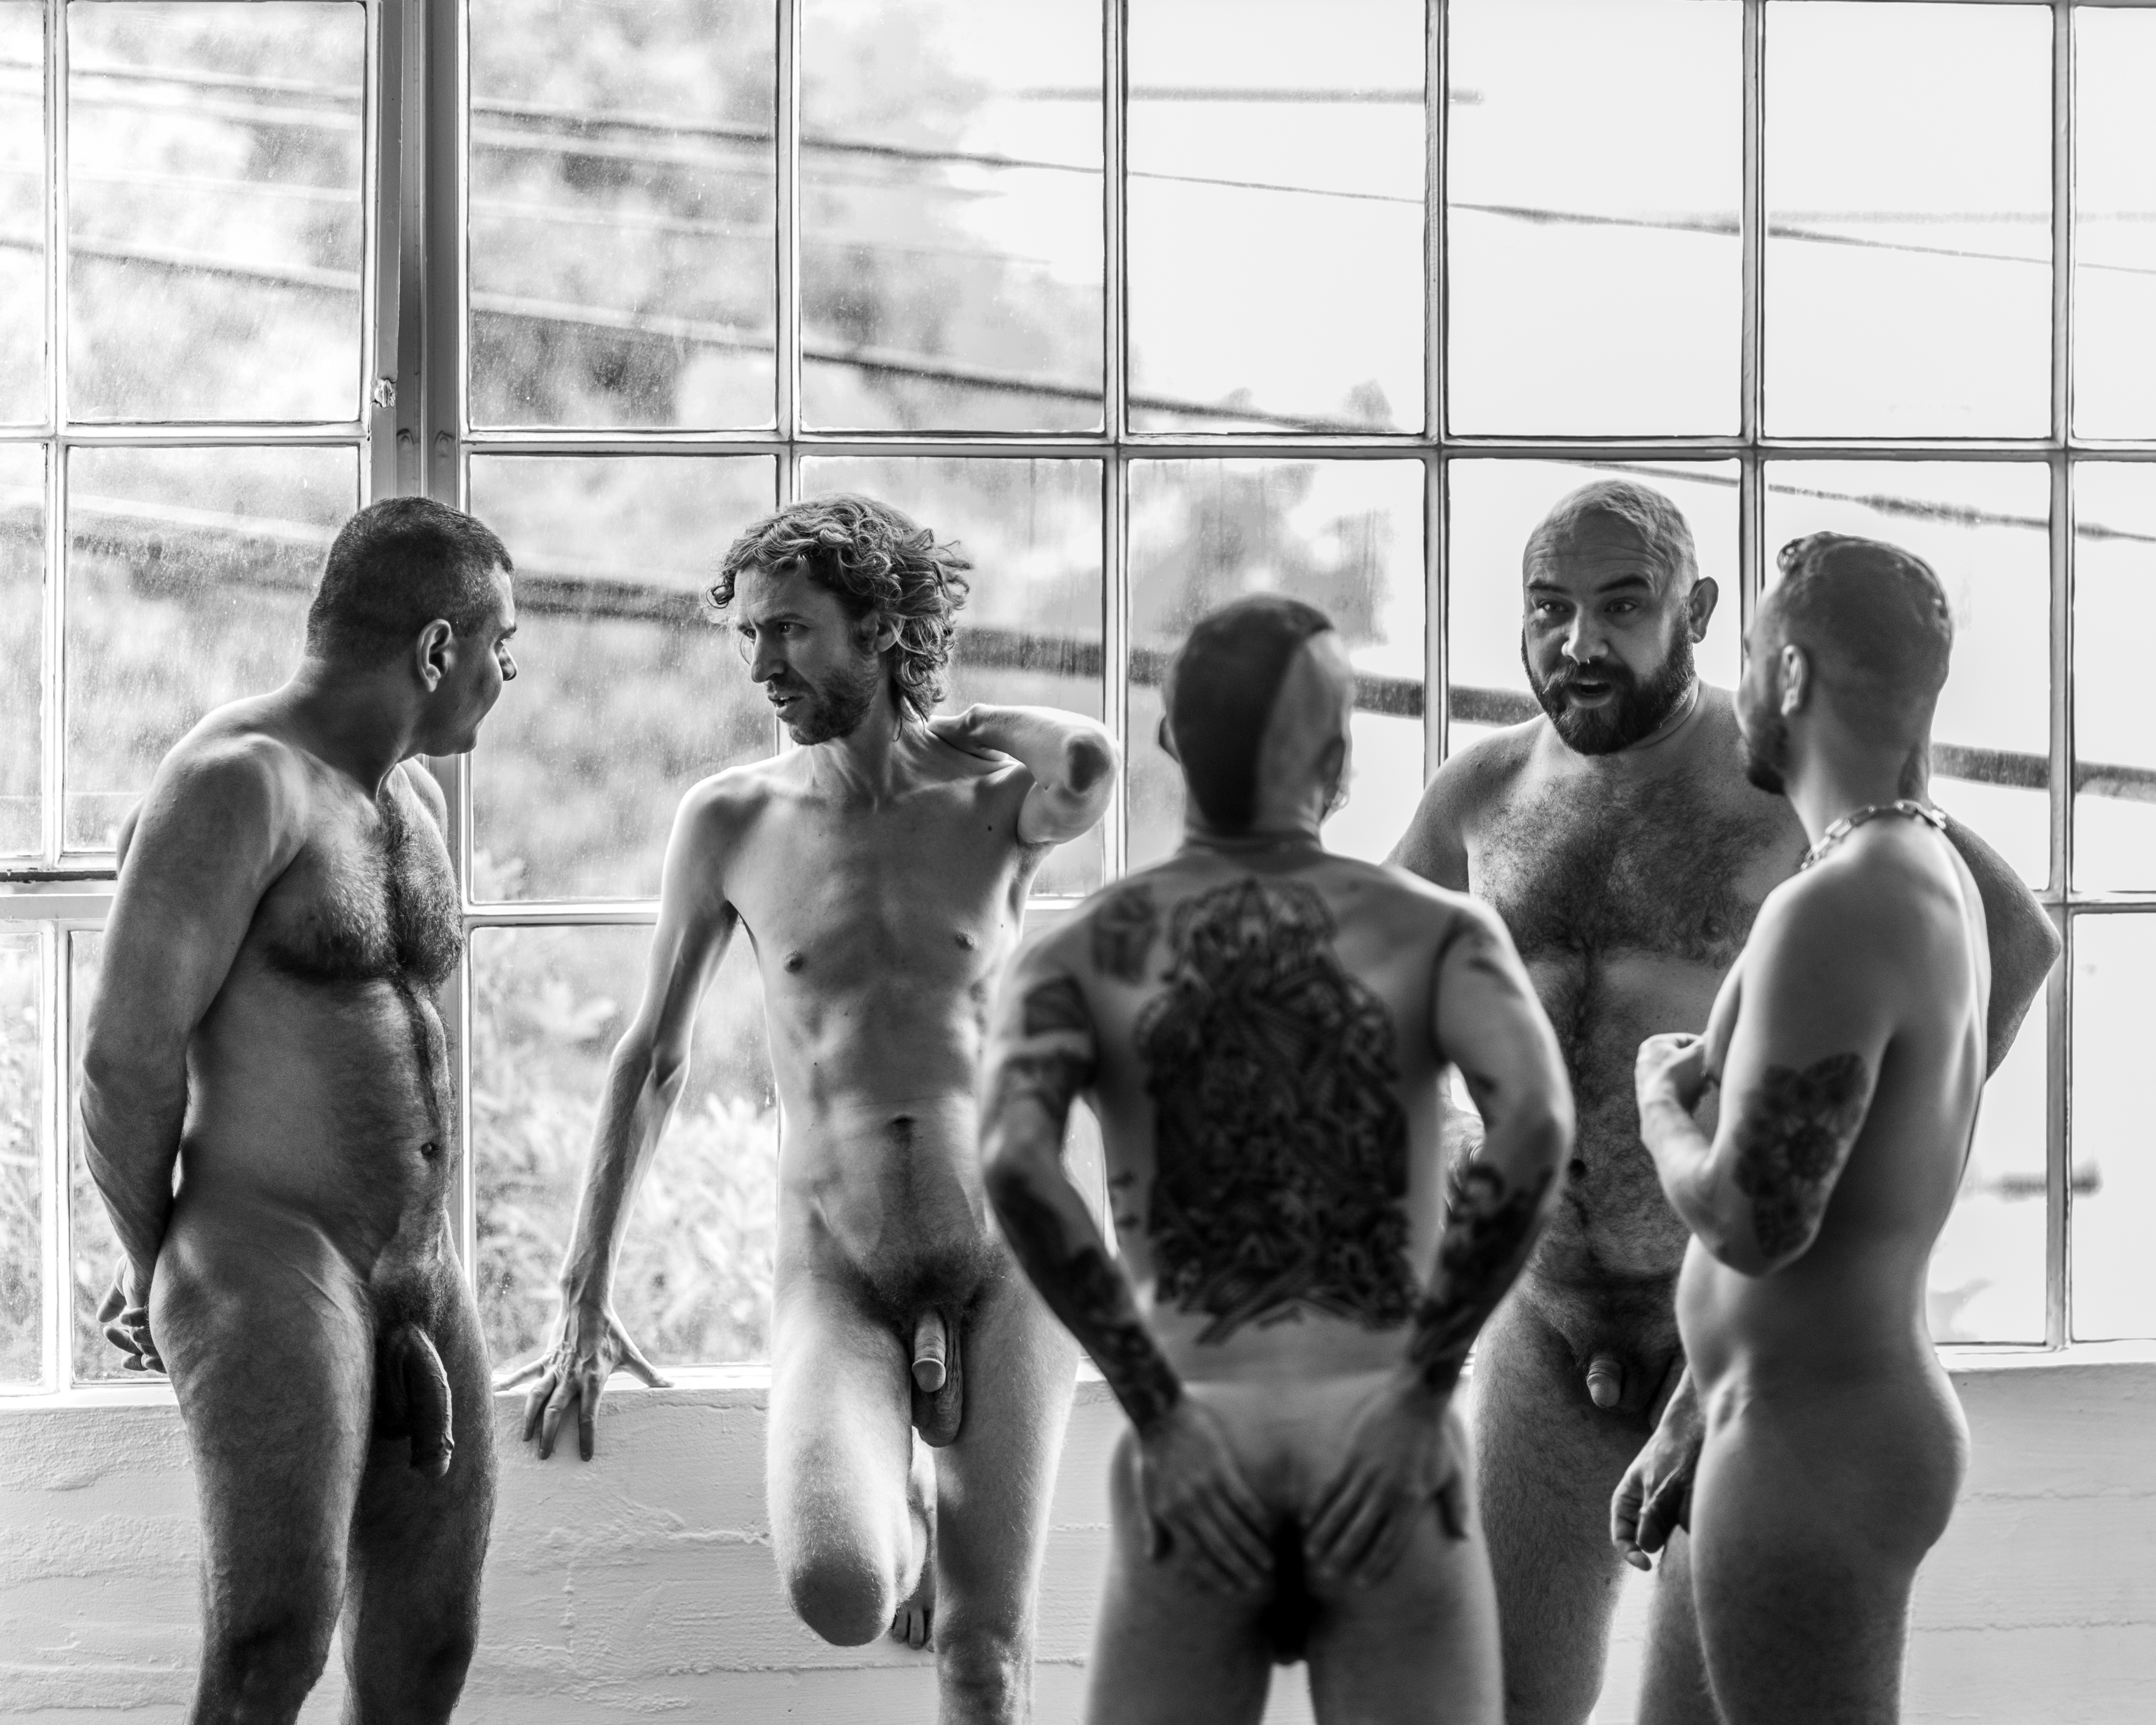 Naked men hanging out